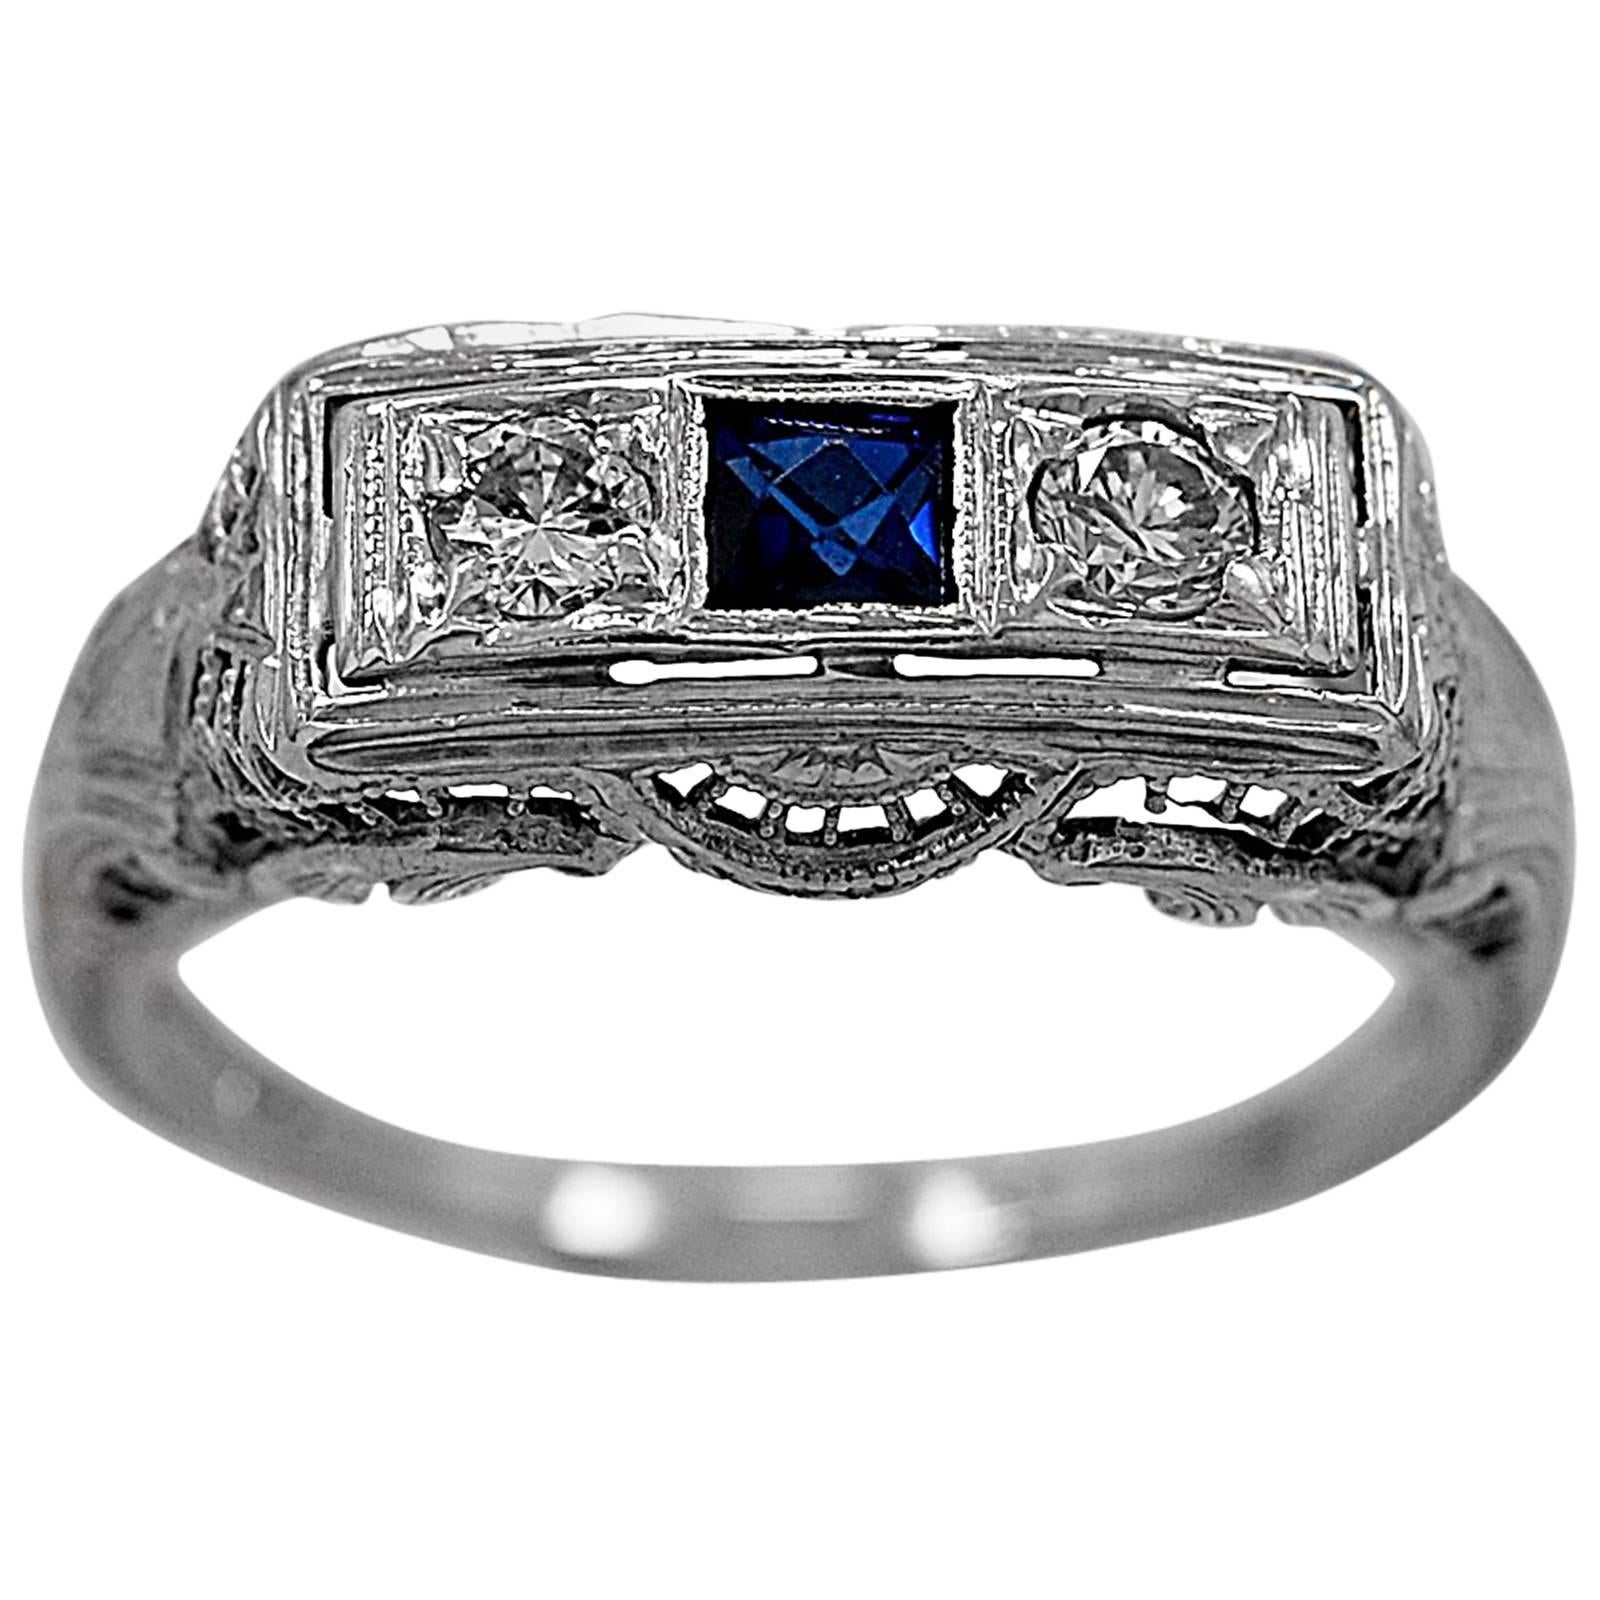 Antique .25 carat diamond sapphire gold engagement ring